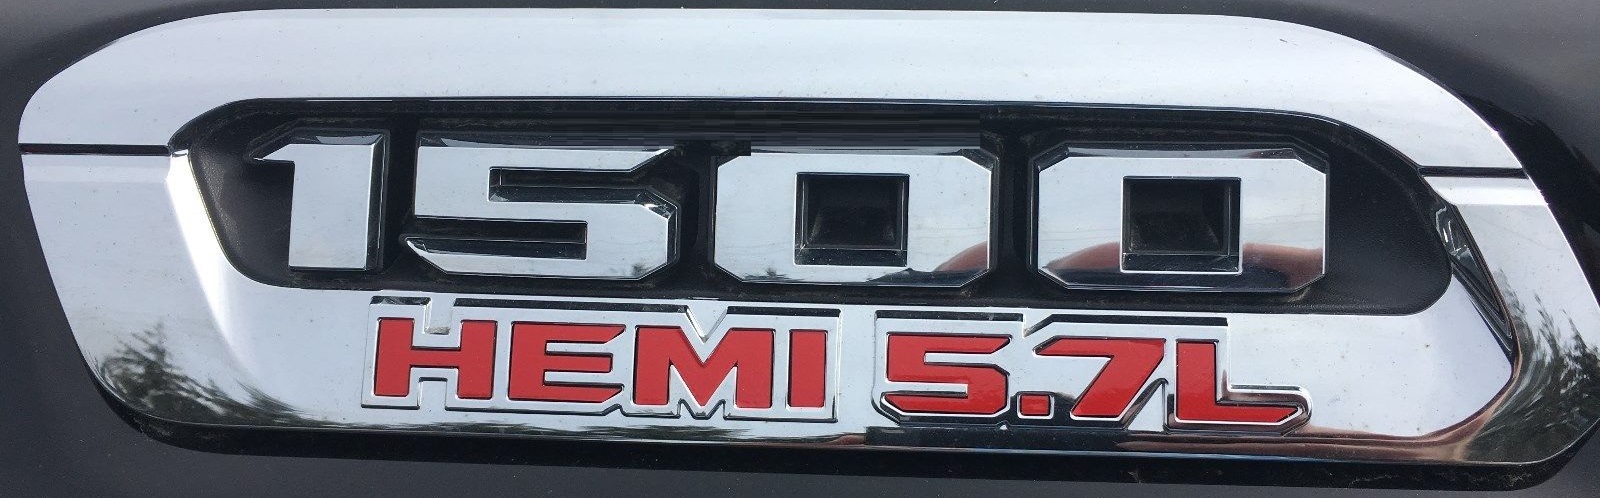 "HEMI 5.7L" Emblem Decal Overlay Kit 2019 Ram Truck - Click Image to Close